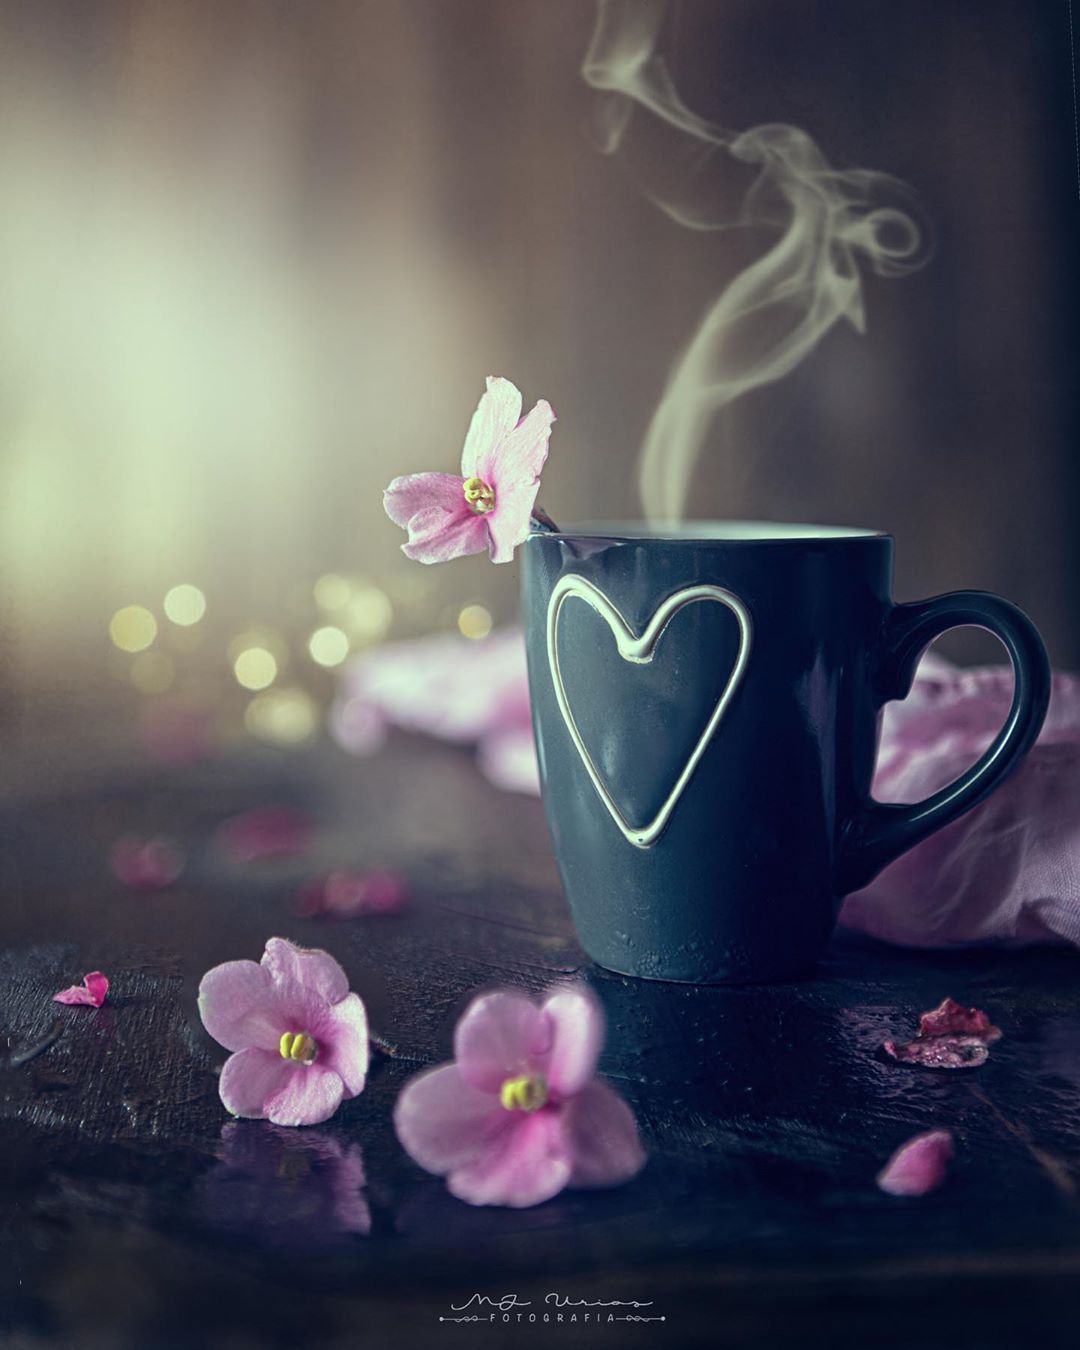 Maria Jose Urios on Instagram: ““My cup of coffee” - - - - - - #stilllife #dark_macro_ar. Coffee flower, Coffee wallpaper iphone, Flower phone wallpaper